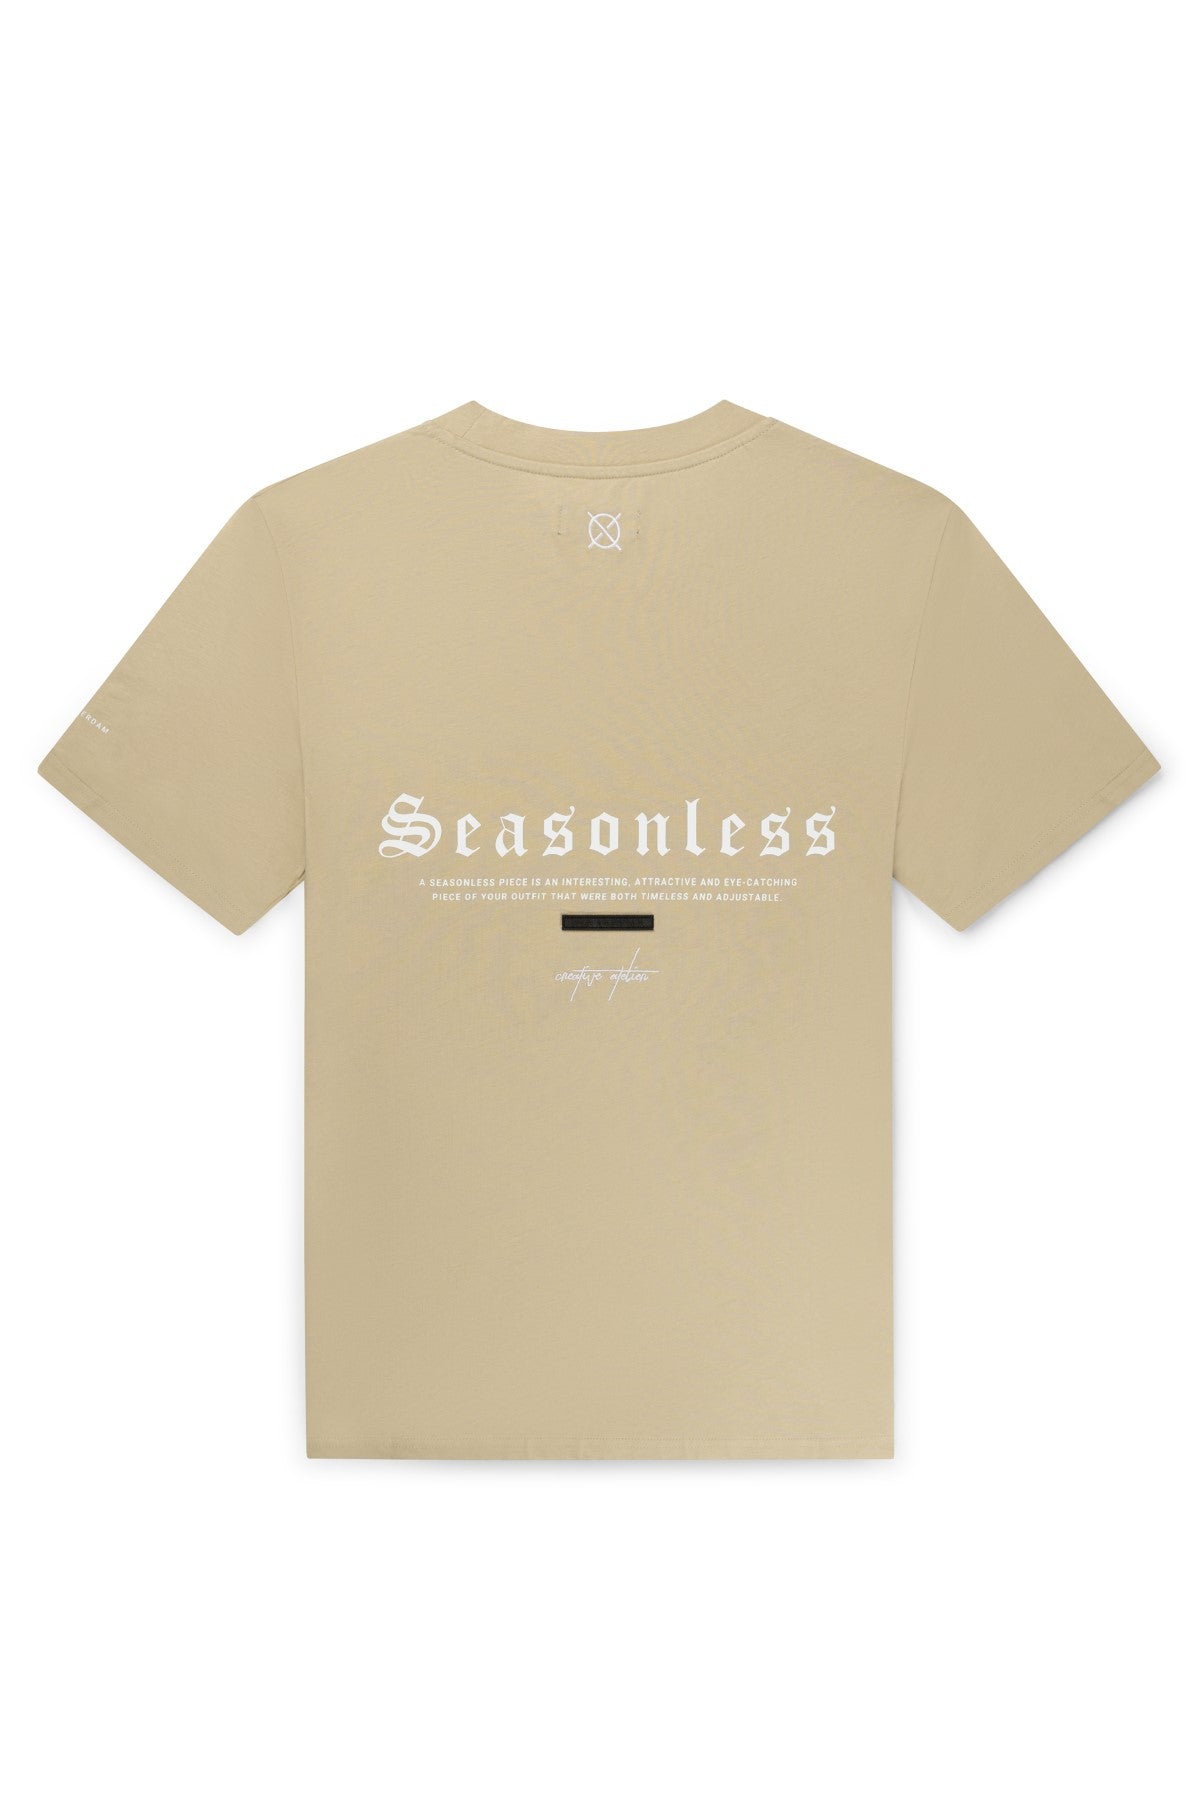 Seasonless T-Shirt - Beige